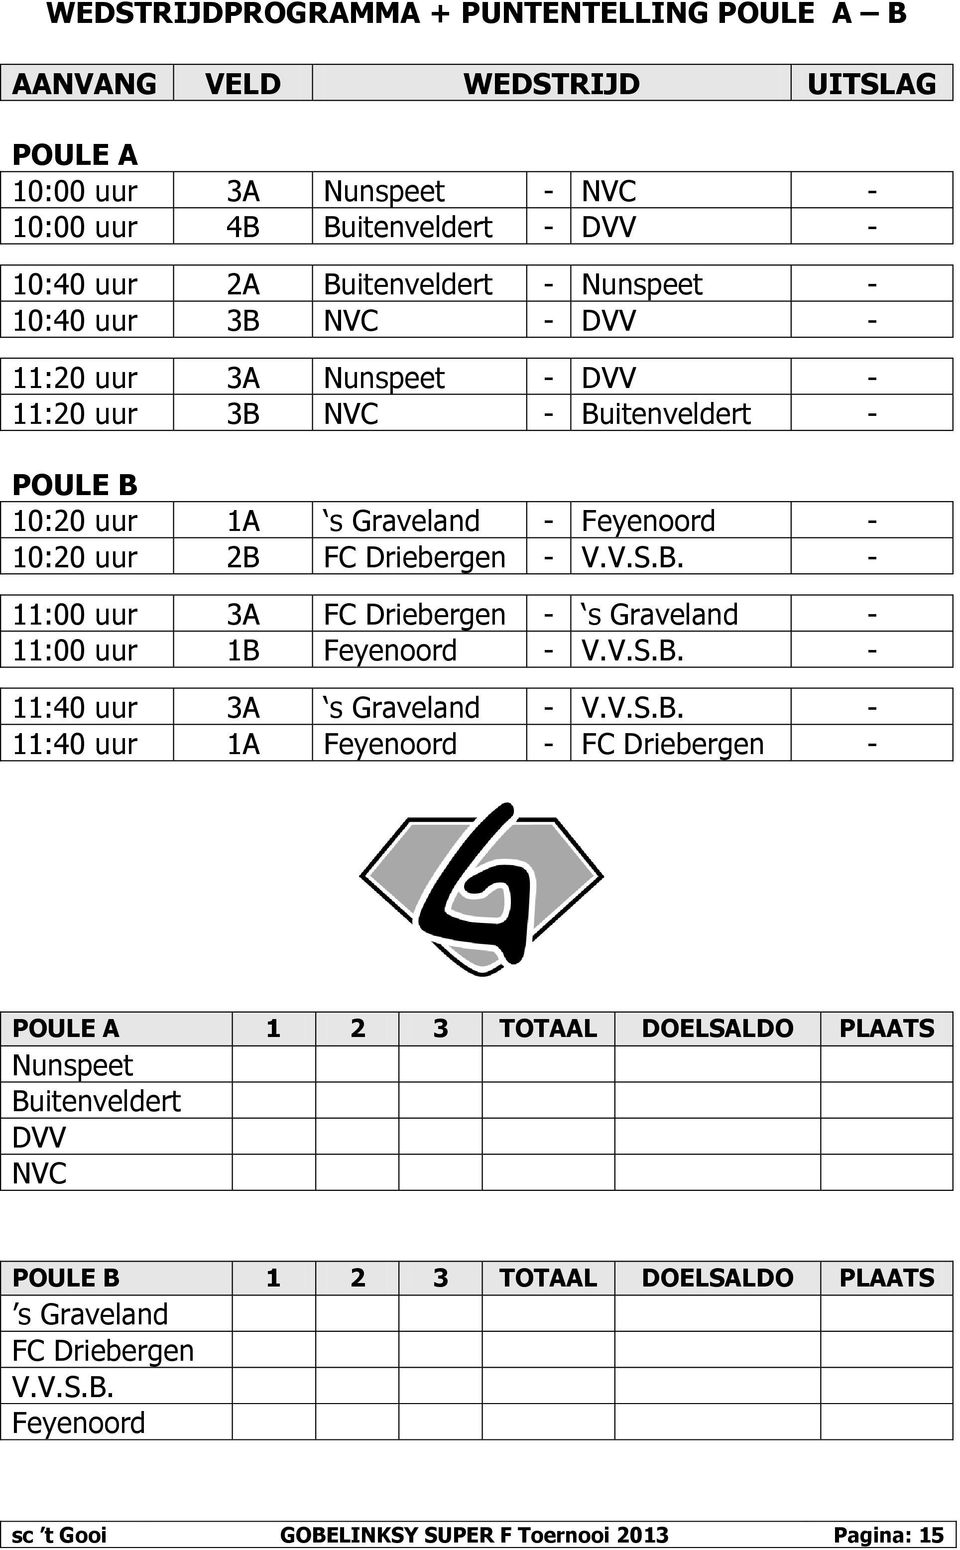 B. - 11:00 uur 3A FC Driebergen - s Graveland - 11:00 uur 1B Feyenoord - V.V.S.B. - 11:40 uur 3A s Graveland - V.V.S.B. - 11:40 uur 1A Feyenoord - FC Driebergen - POULE A 1 2 3 TOTAAL DOELSALDO PLAATS Nunspeet Buitenveldert DVV NVC POULE B 1 2 3 TOTAAL DOELSALDO PLAATS s Graveland FC Driebergen V.